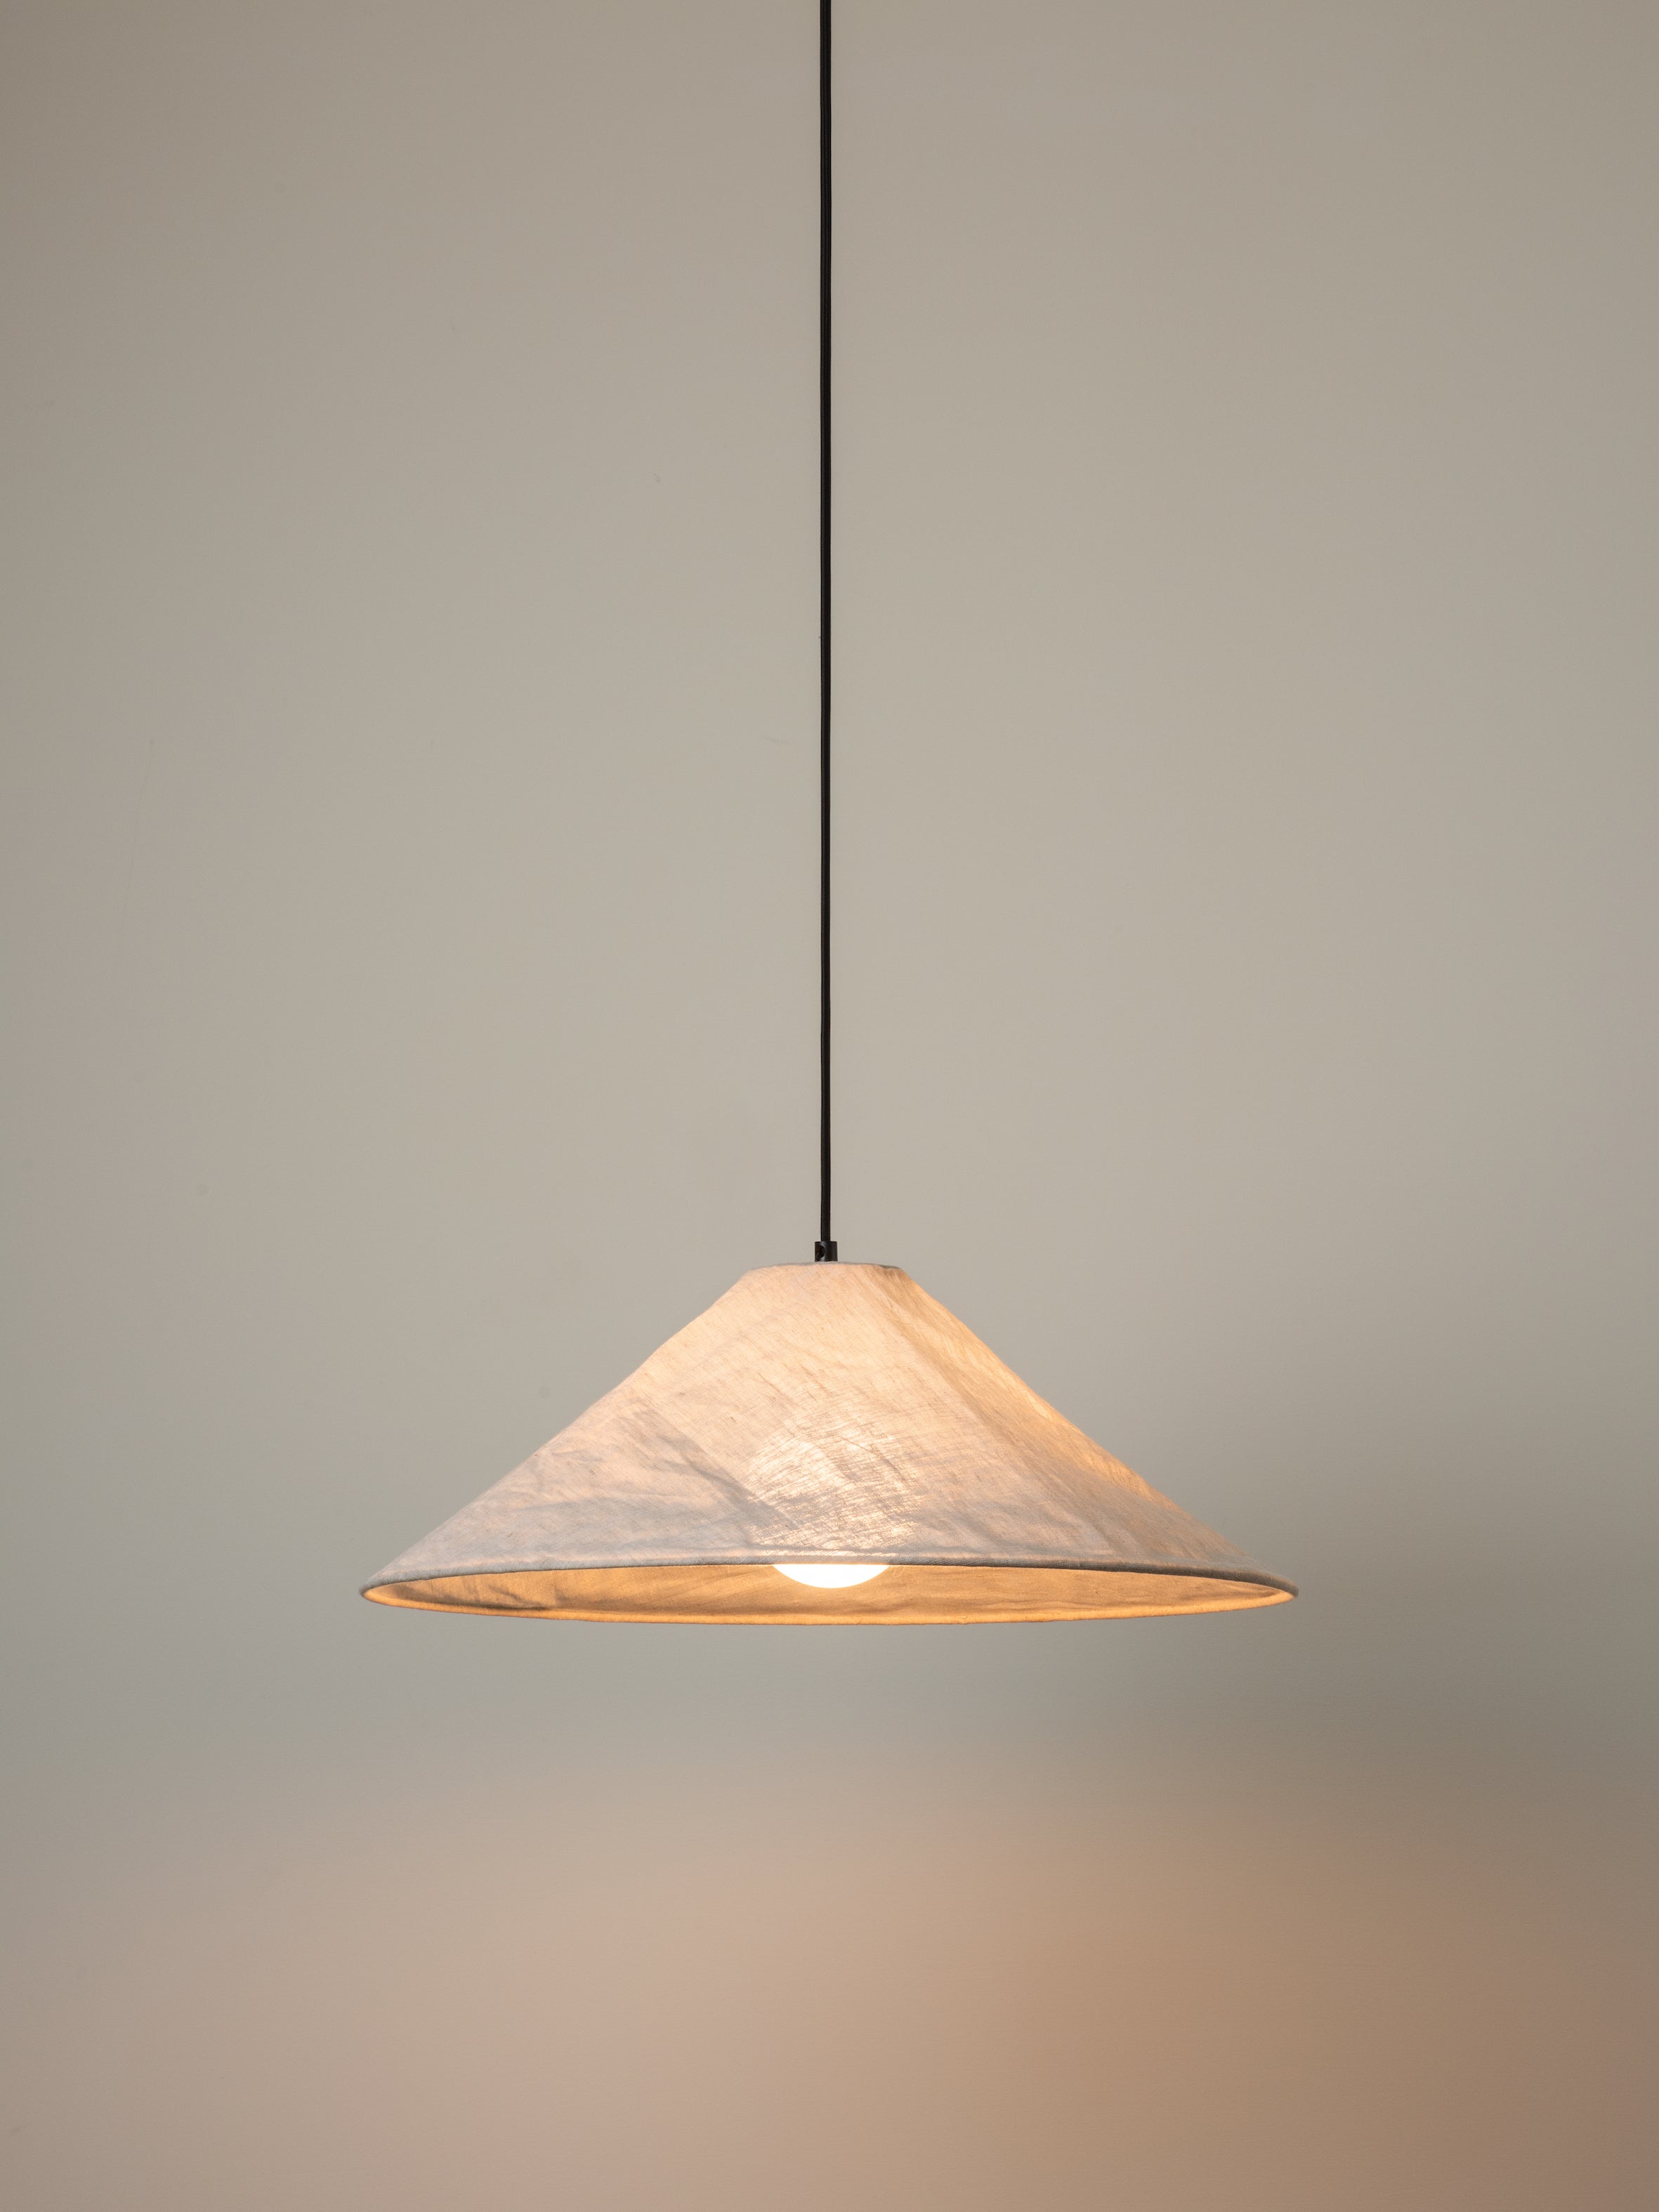 Siya - collapsible large linen shade | Lamp shade | Lights & Lamps | UK | Modern Affordable Designer Lighting